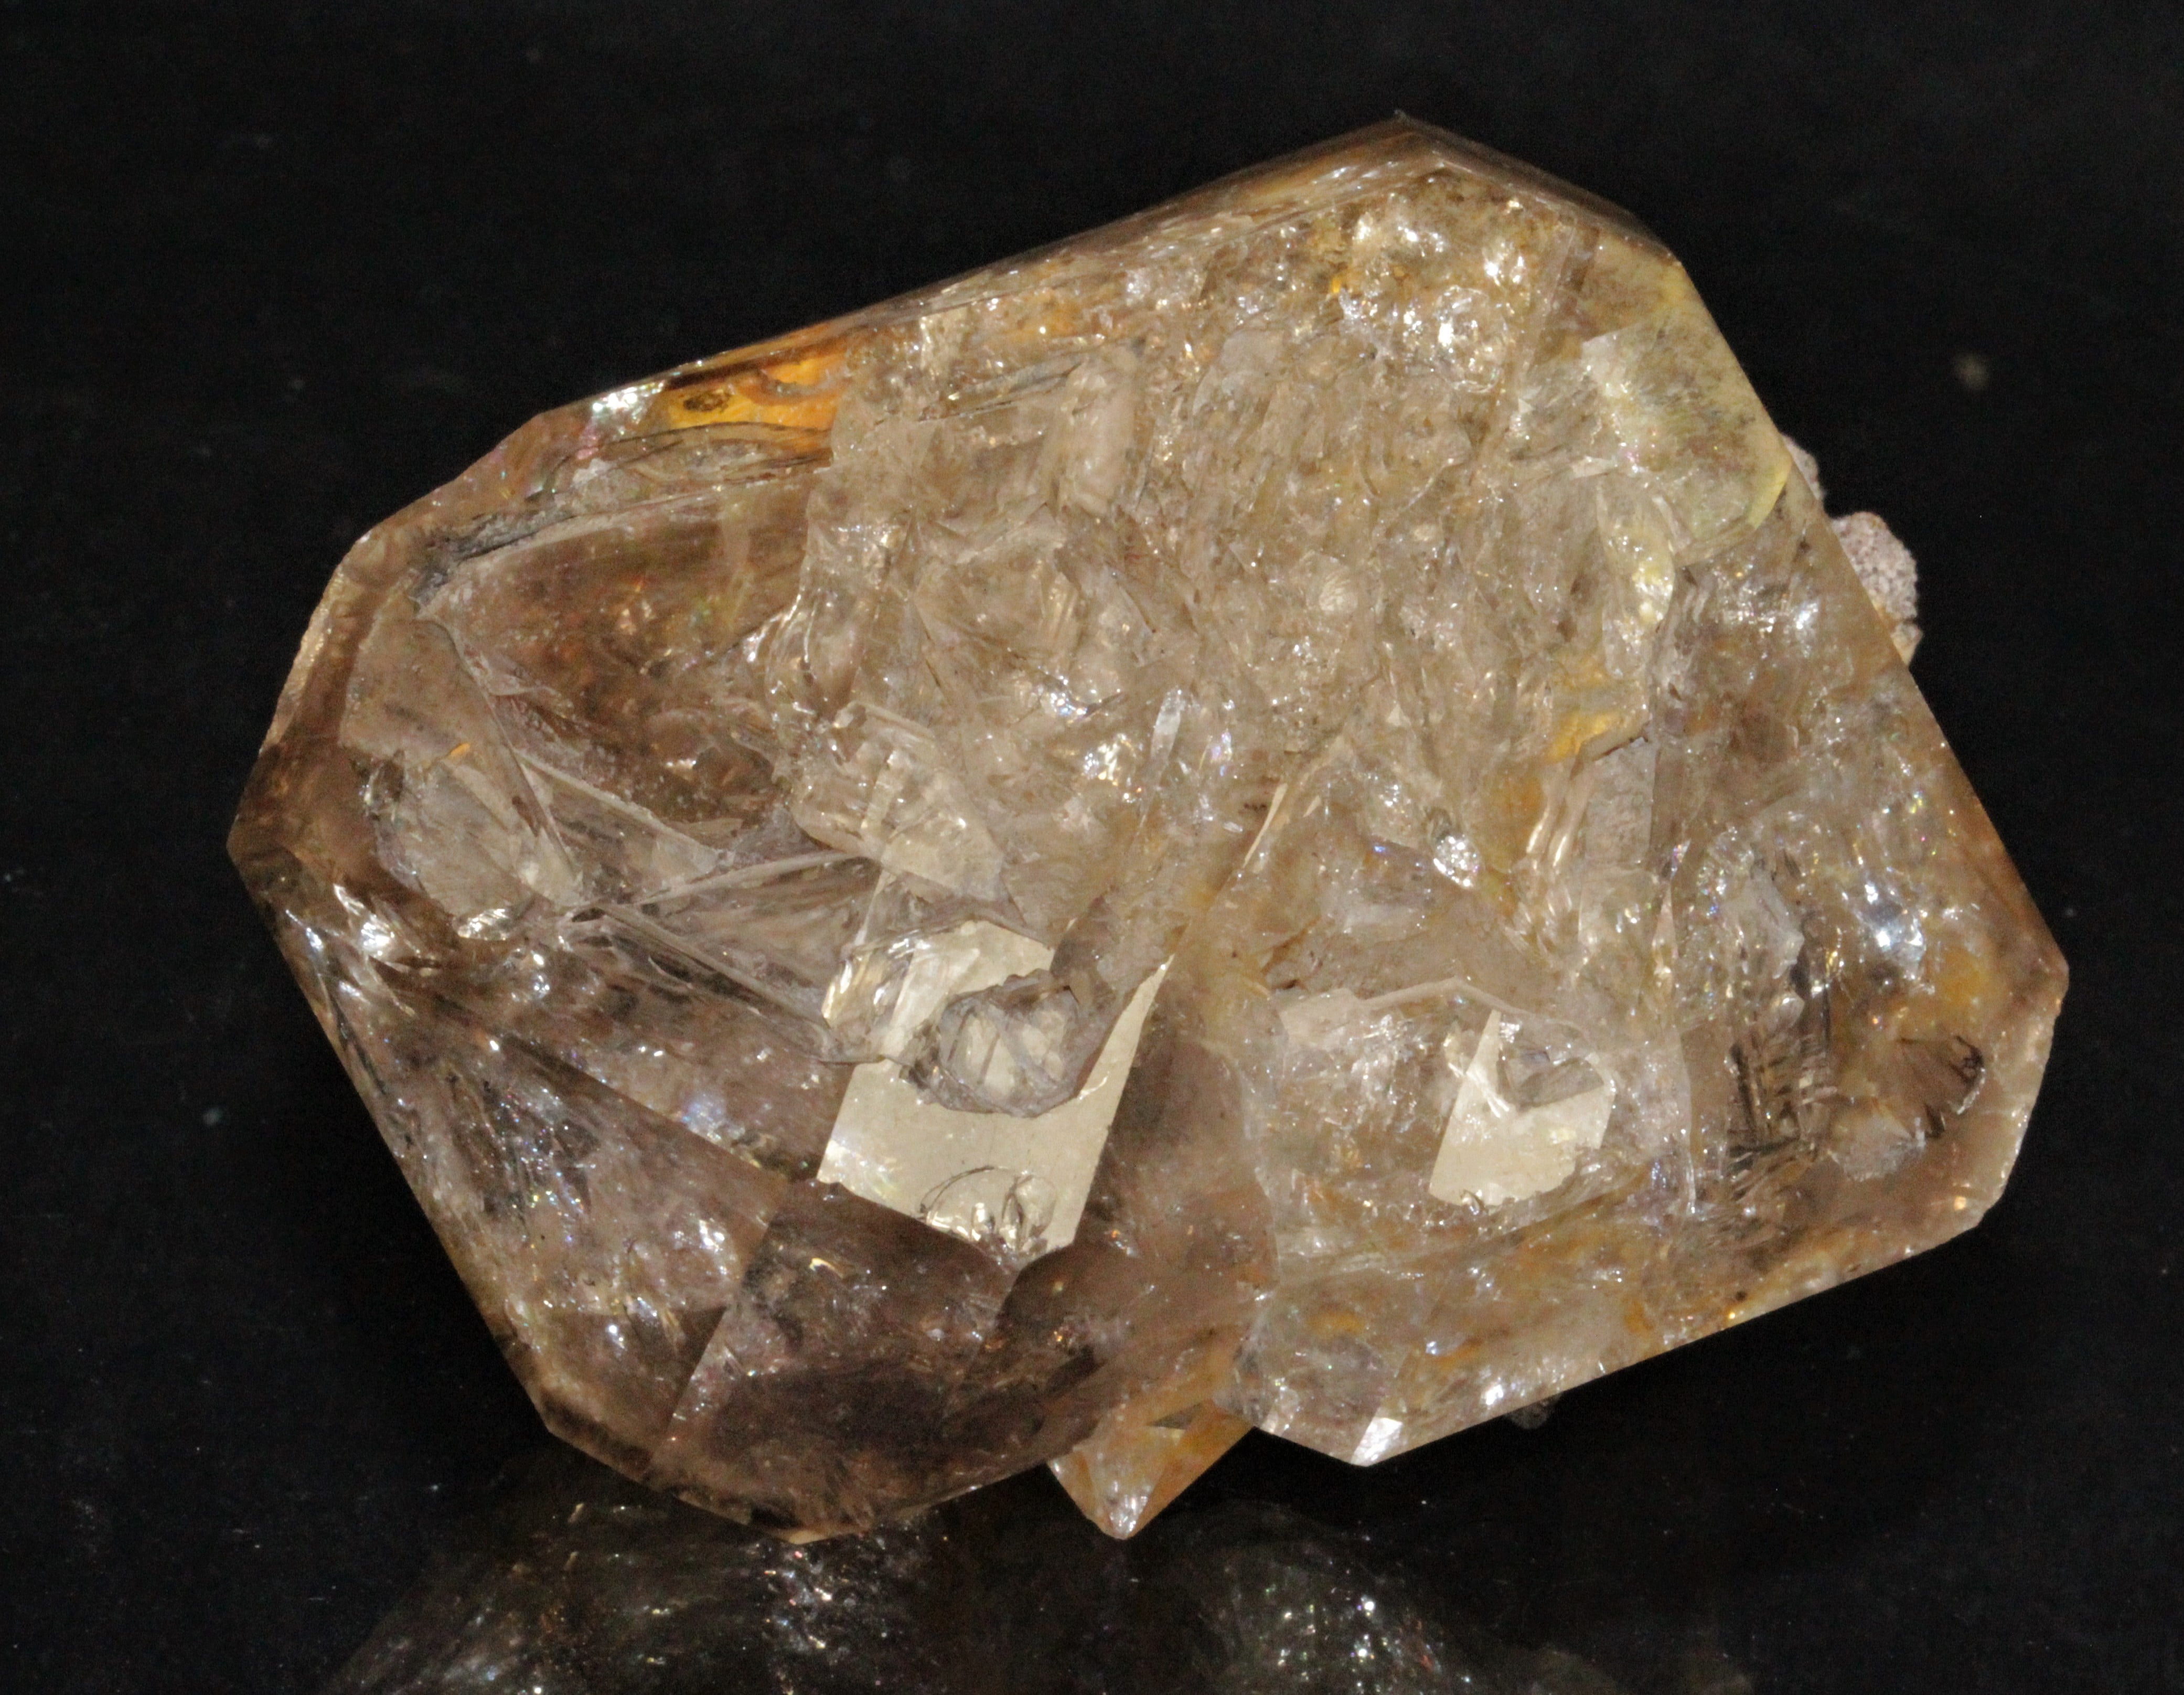 Cristal fenêtre de quartz fumé, Ace of Diamonds Mine, Herkimer, New York, USA.